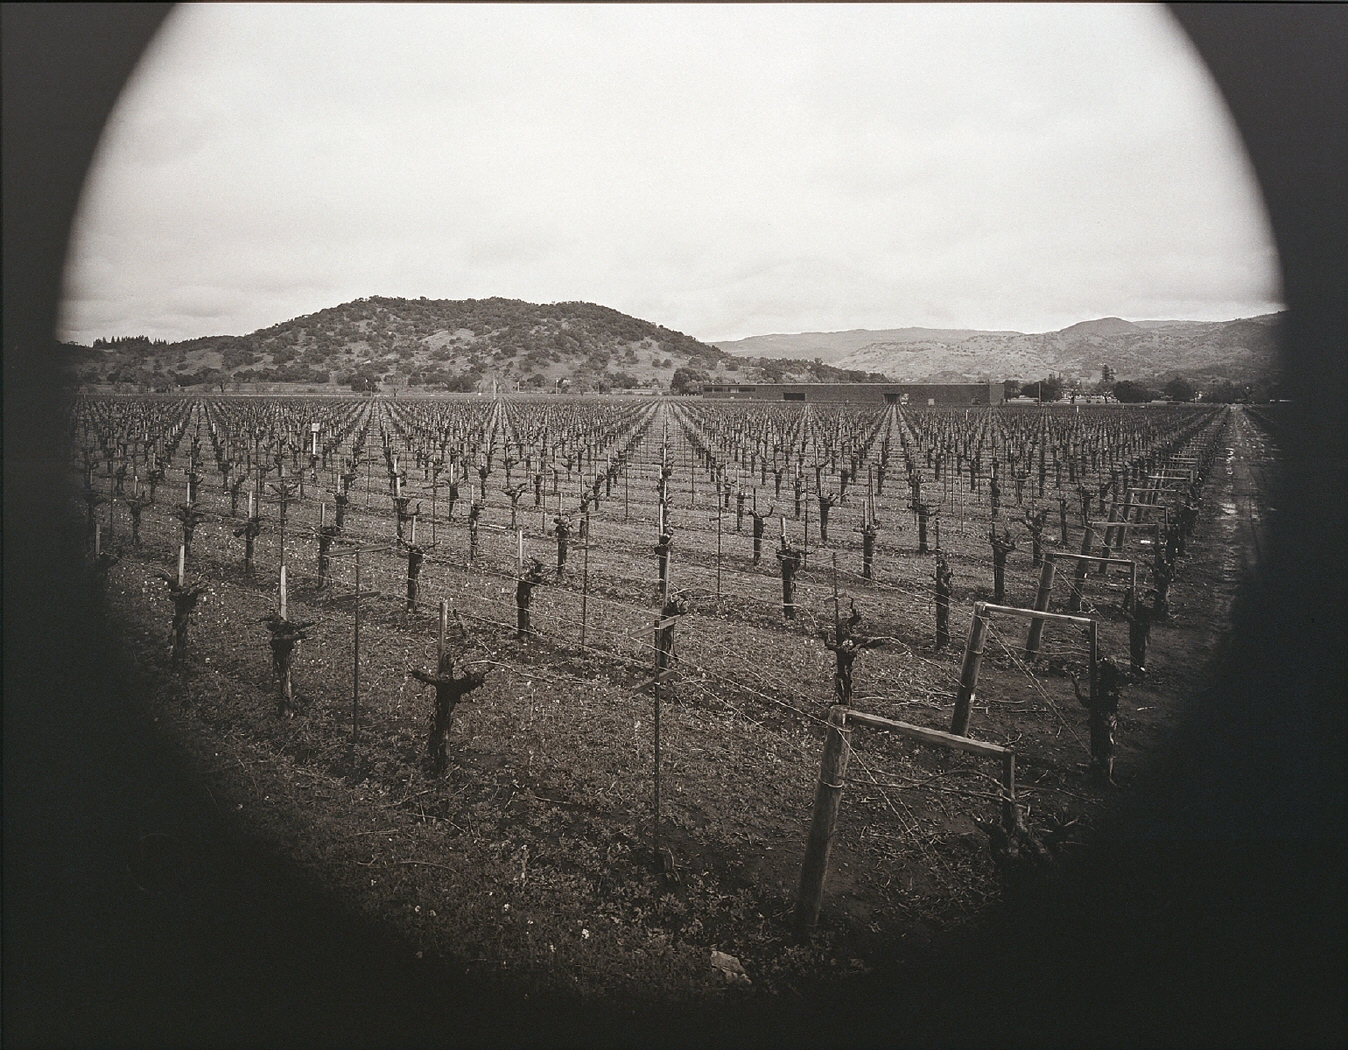 Dominus Estate vineyard, Yountville, California. Winery by Herzog & de Meuron, 1999